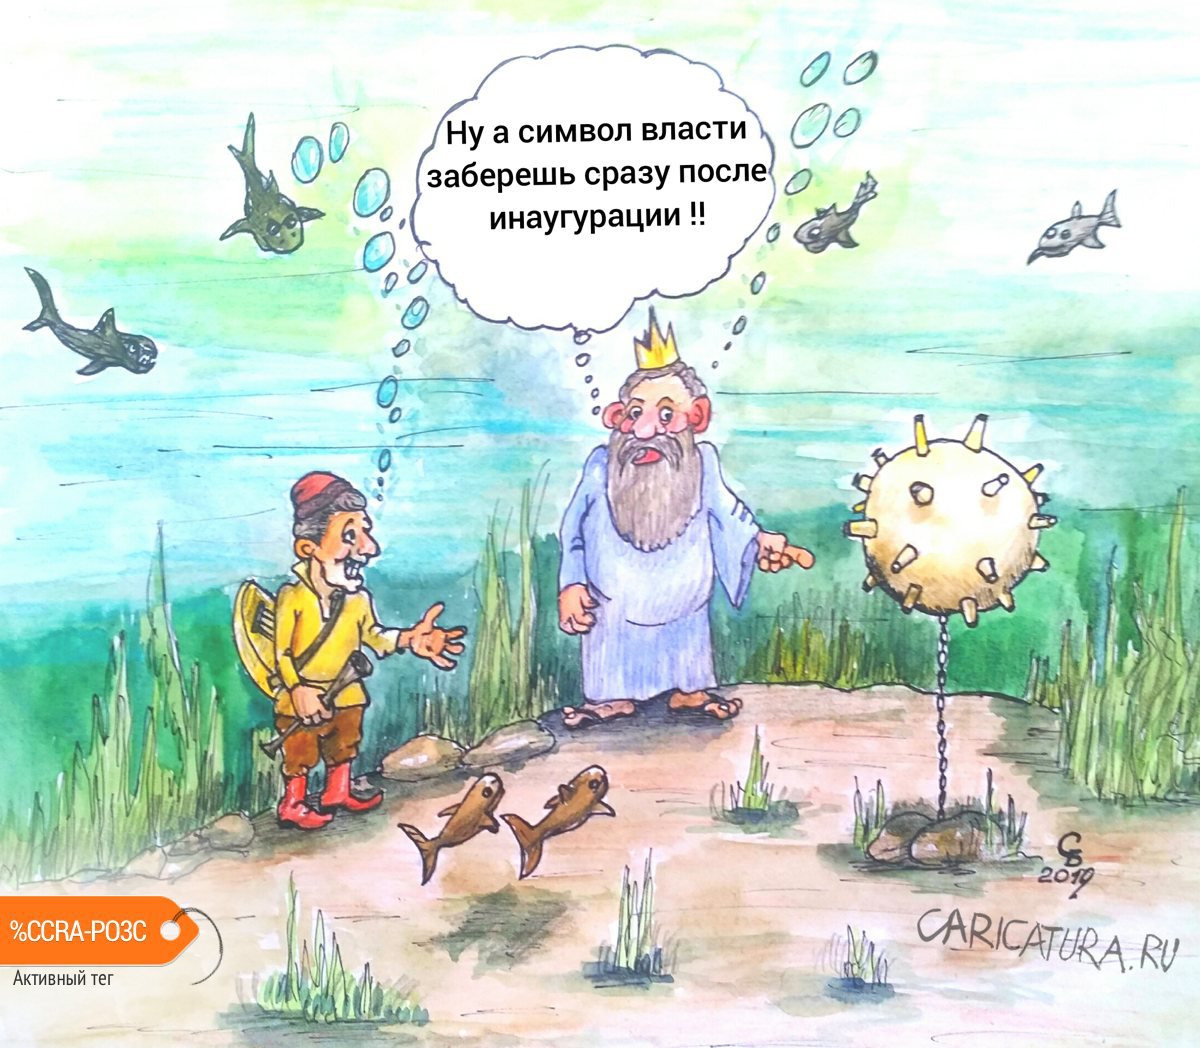 Карикатура ""САДКО" на новый лад", Сергей Боровиков